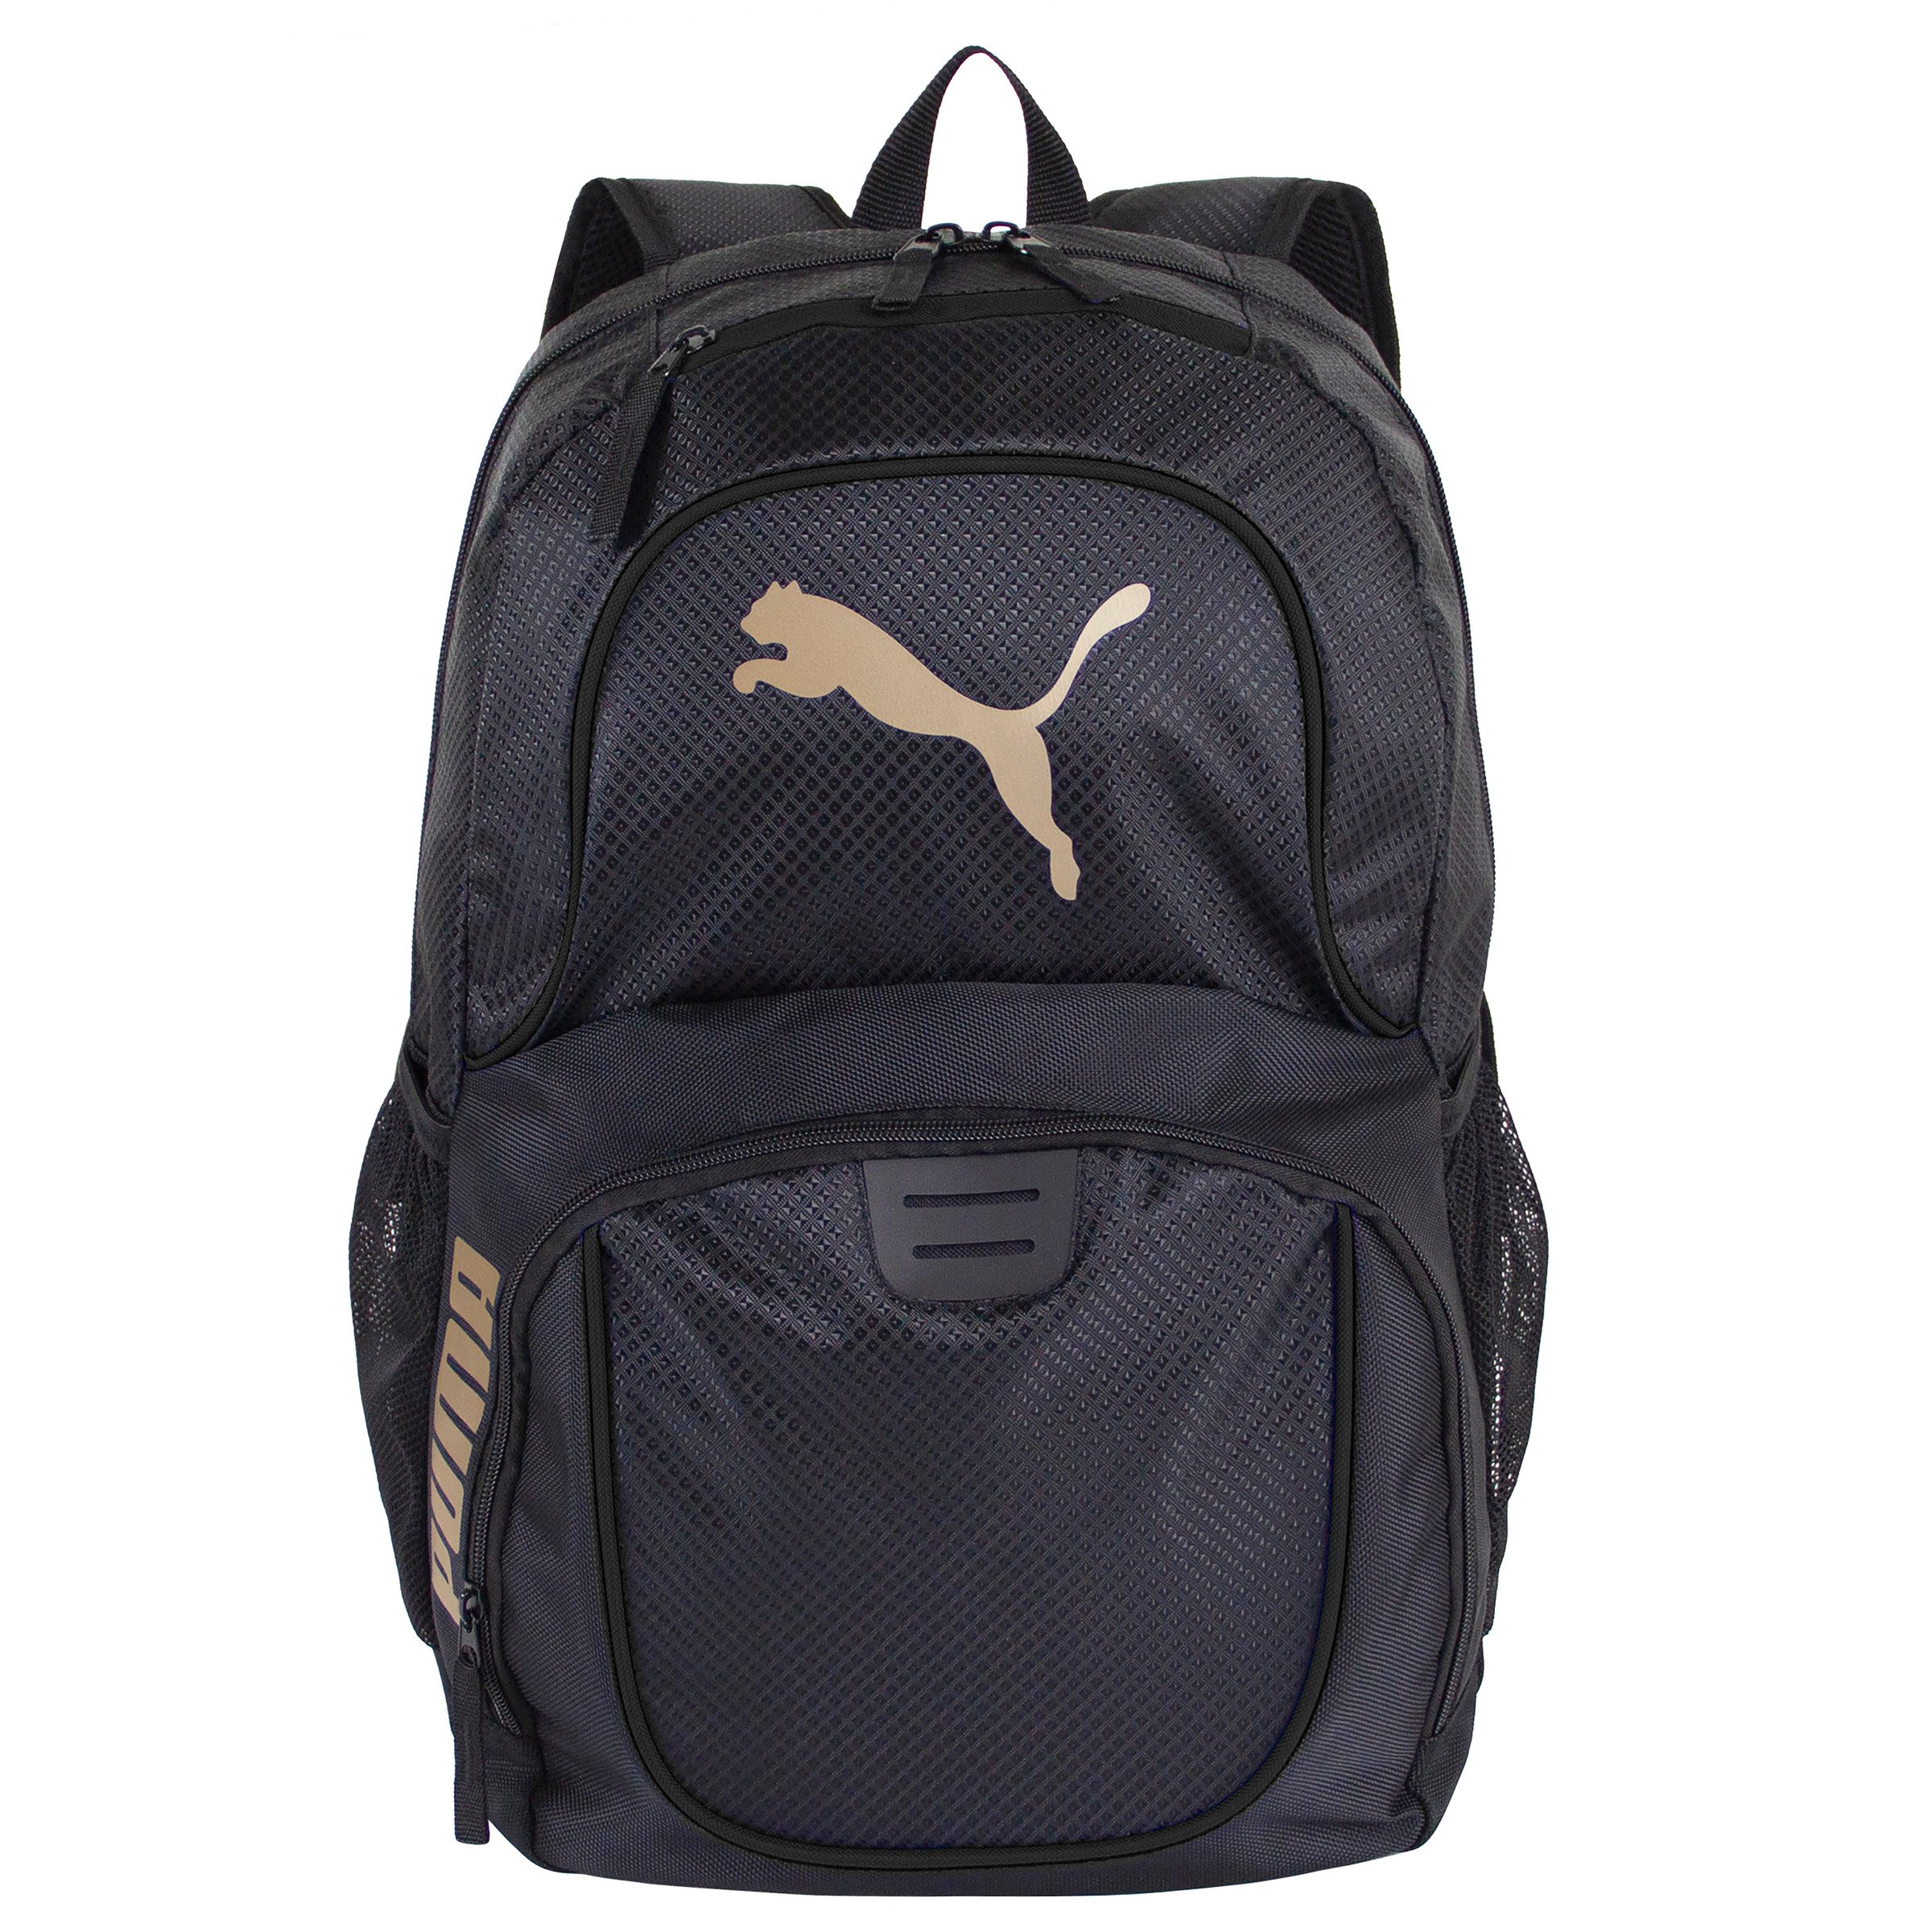 black and gold puma backpack